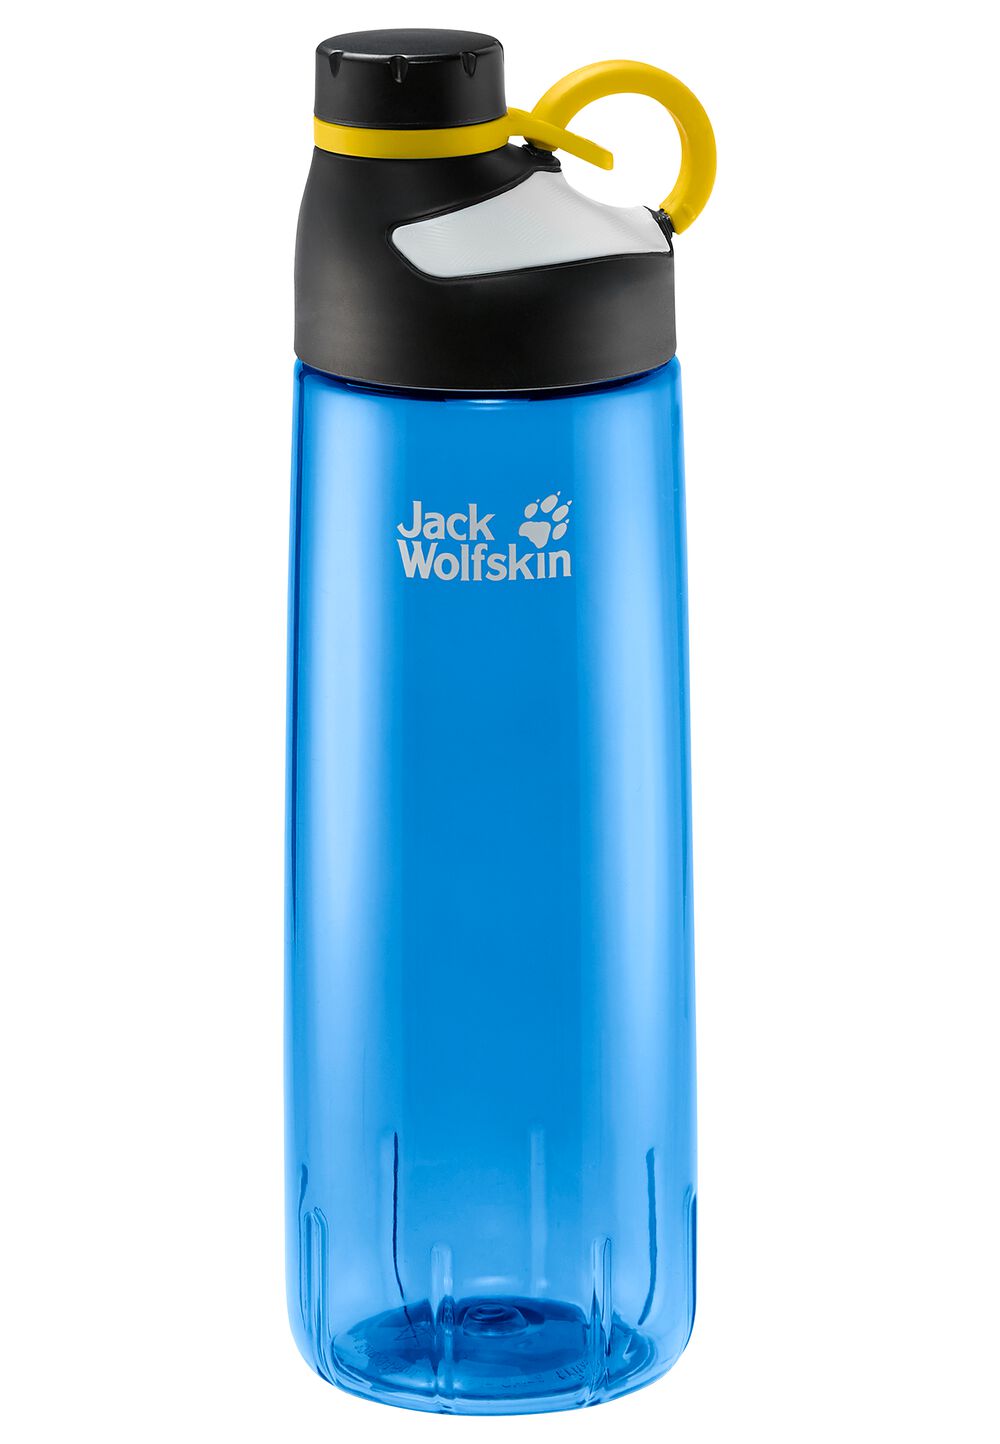 Image of Jack Wolfskin robuste Trinkflasche Mancora 1.0 one size blau electric blue